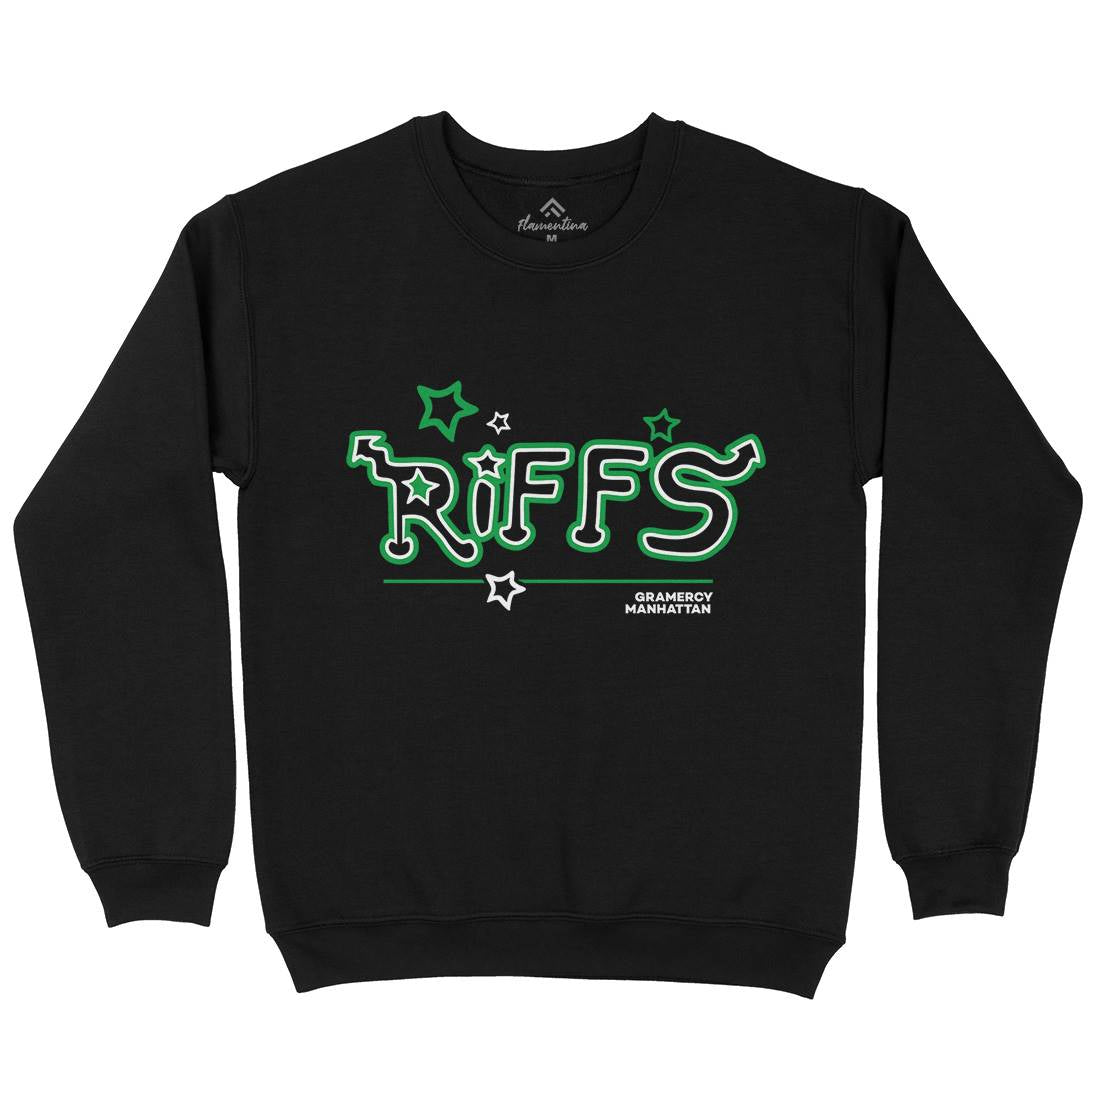 Riffs Mens Crew Neck Sweatshirt Retro D290